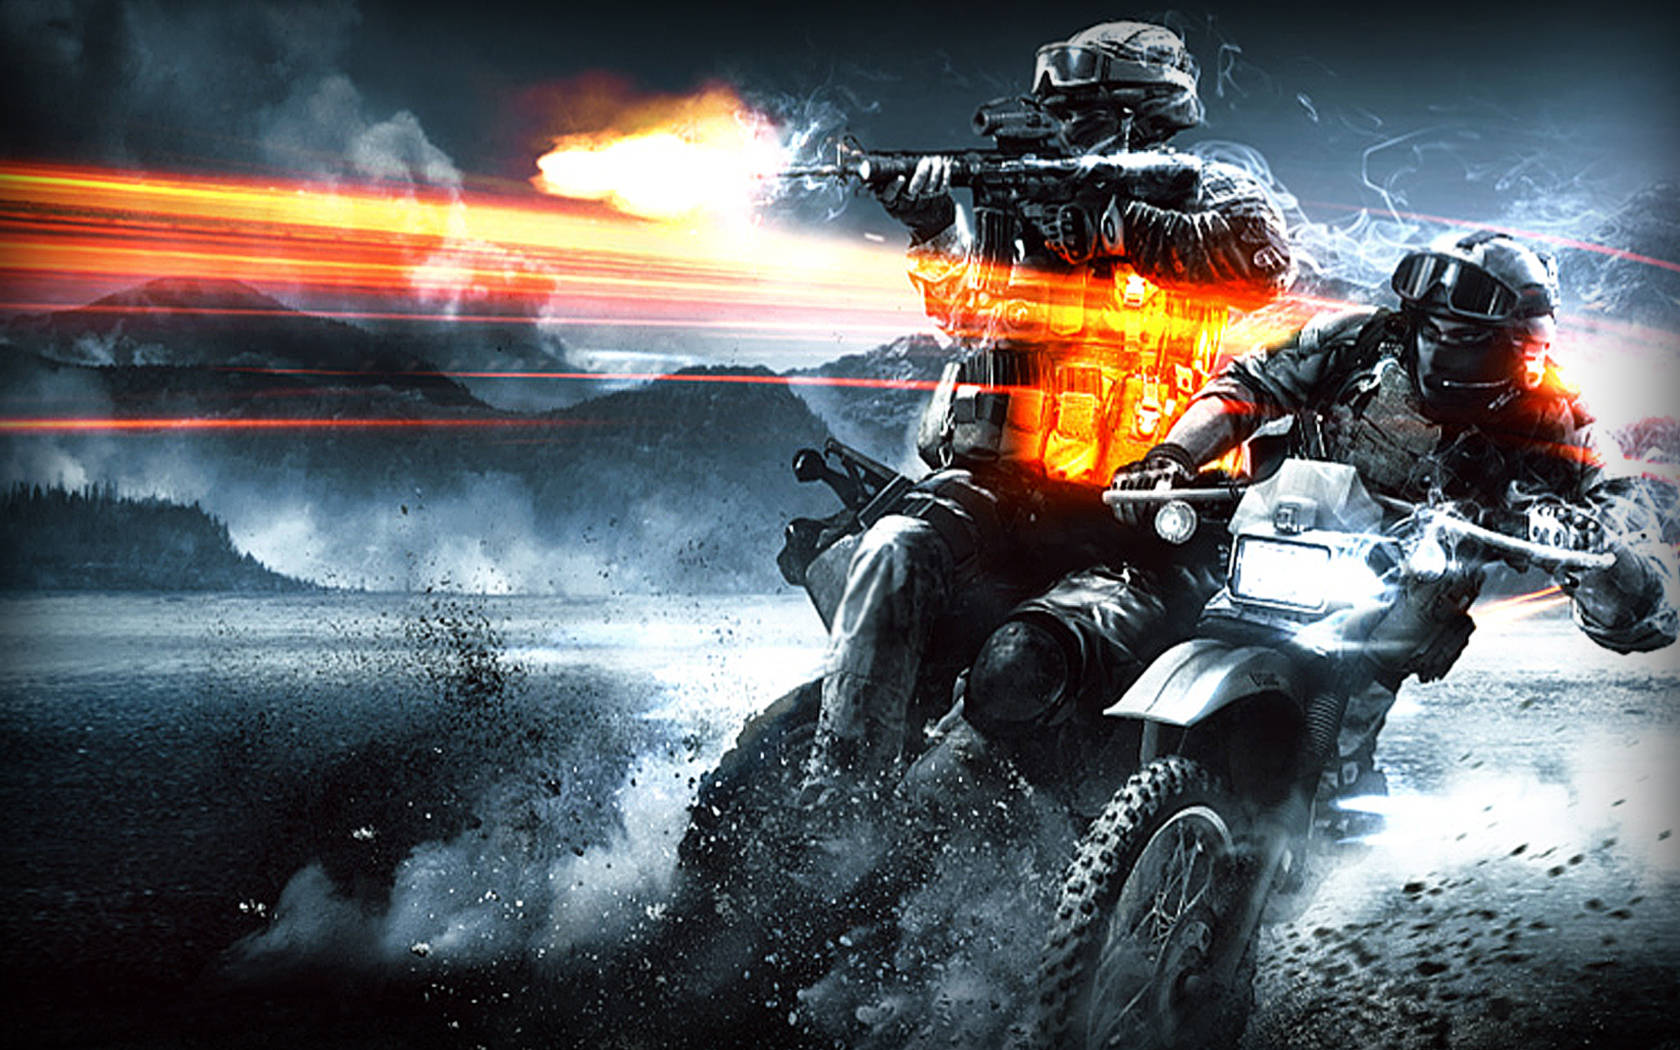 Cool Battlefield 3 Soldiers In Motorcycle Wallpaper